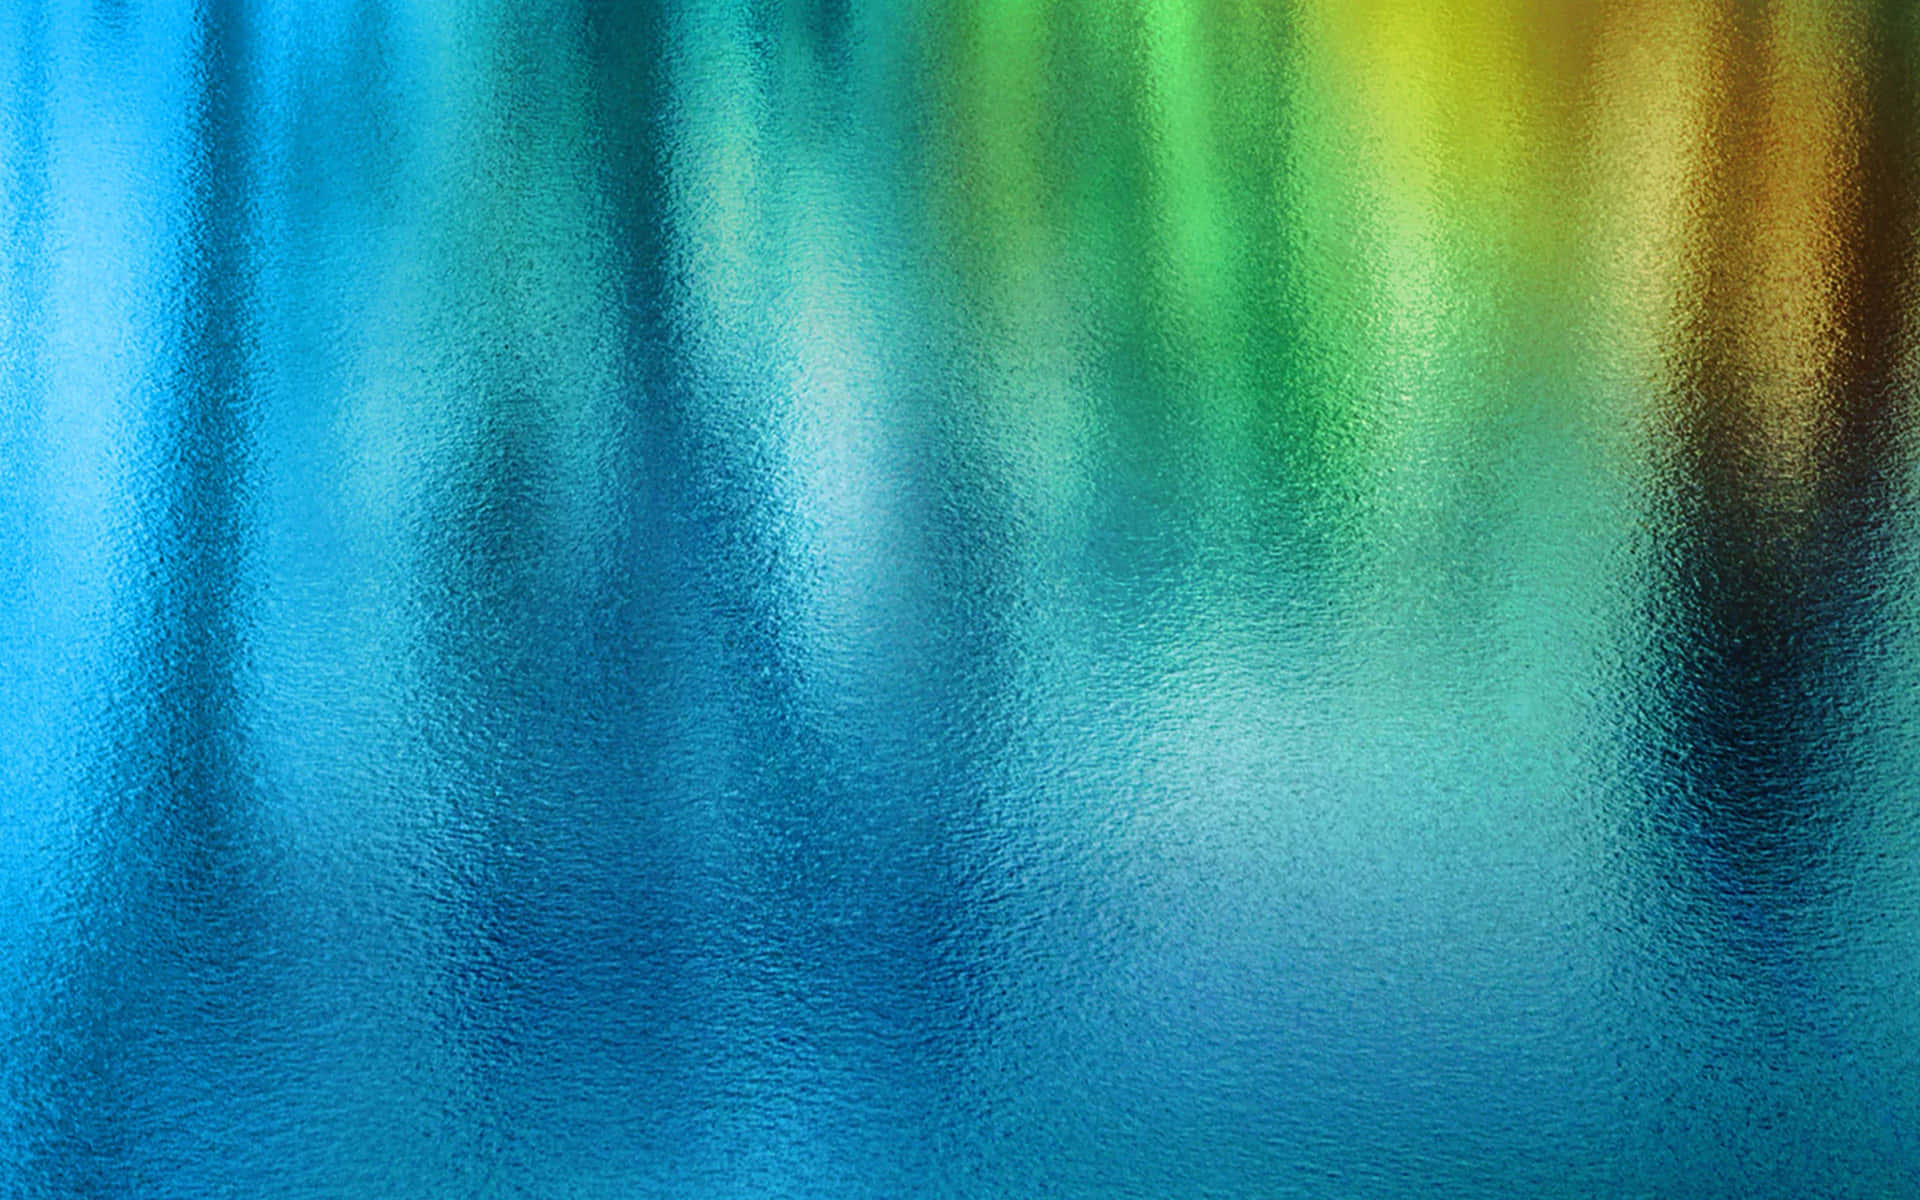 Hazy Blue Galaxy Note 4 Wallpaper